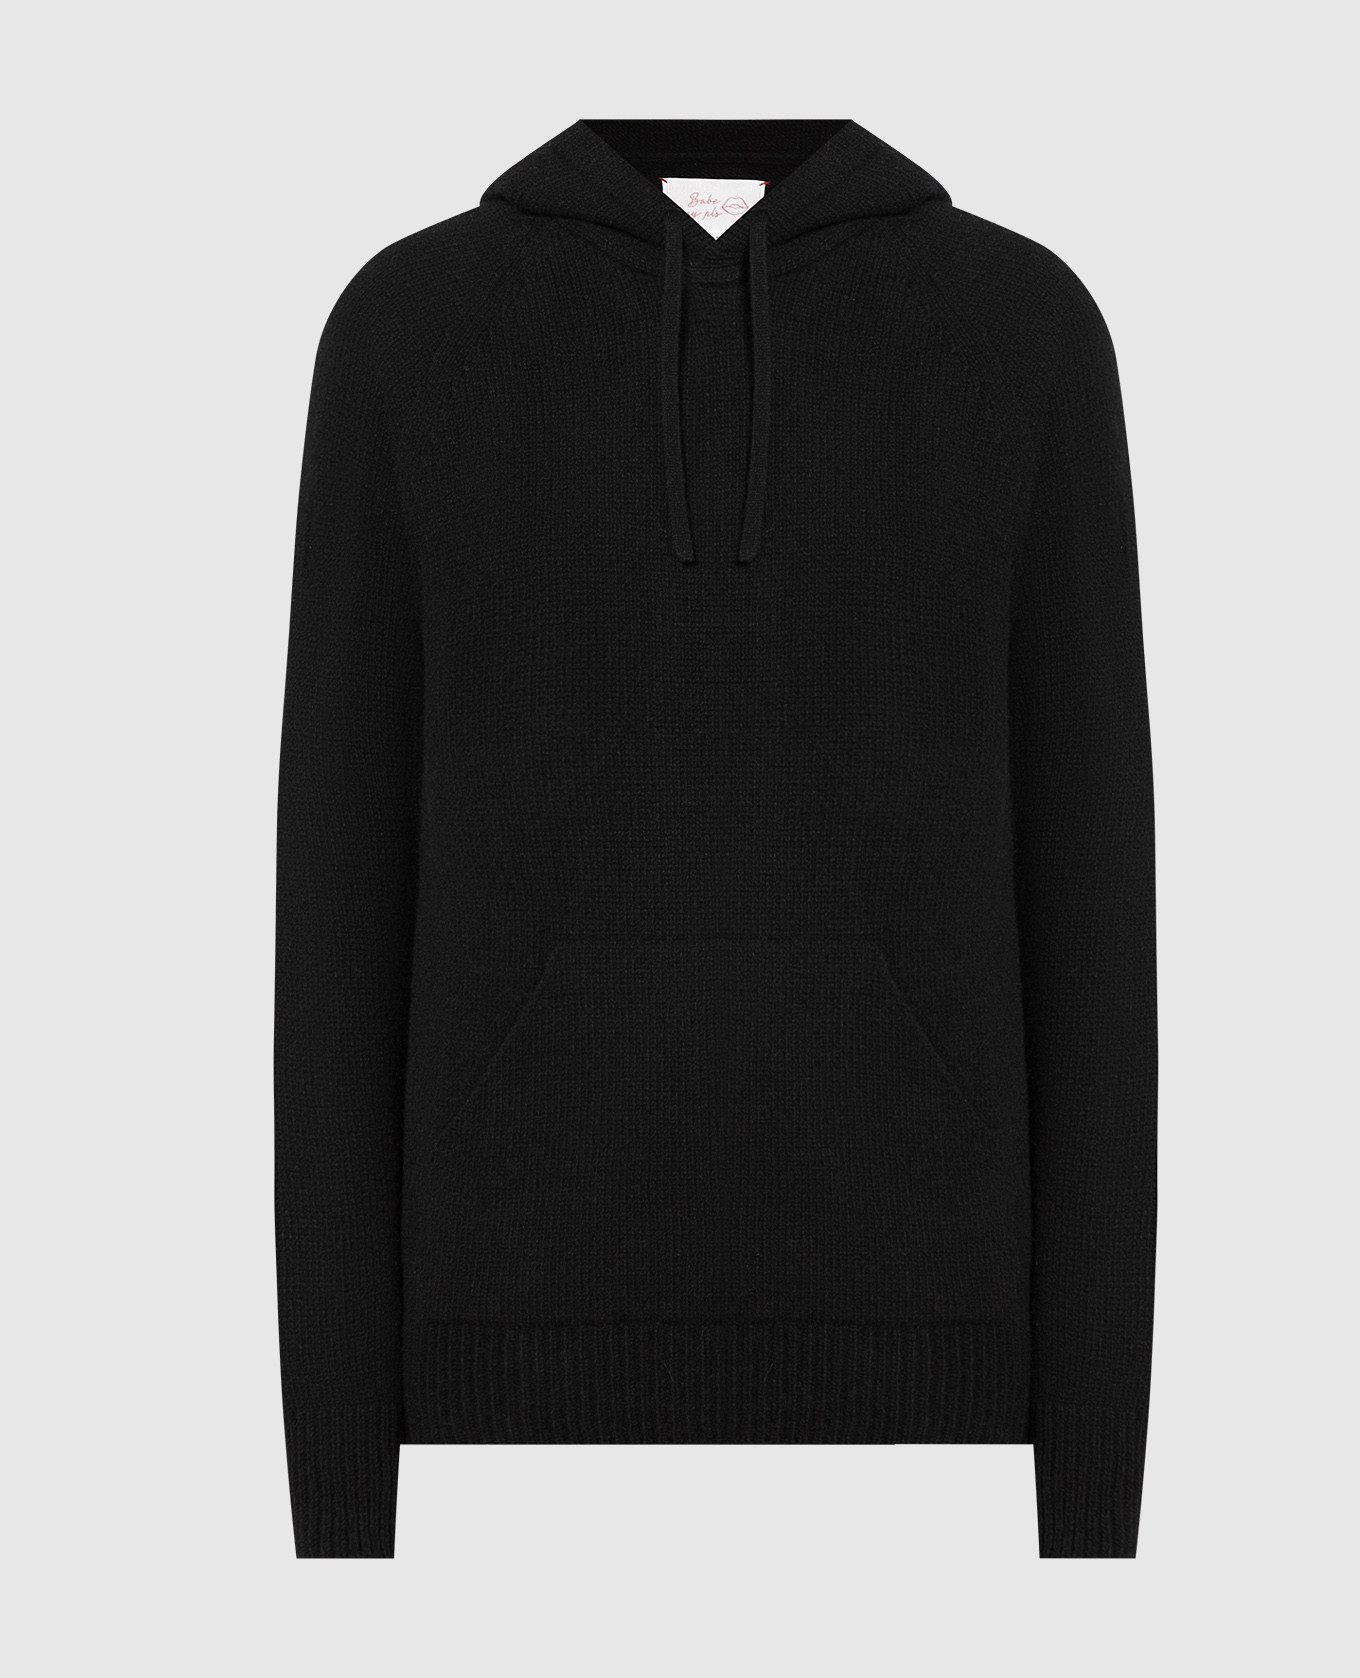 Black cashmere hoodie